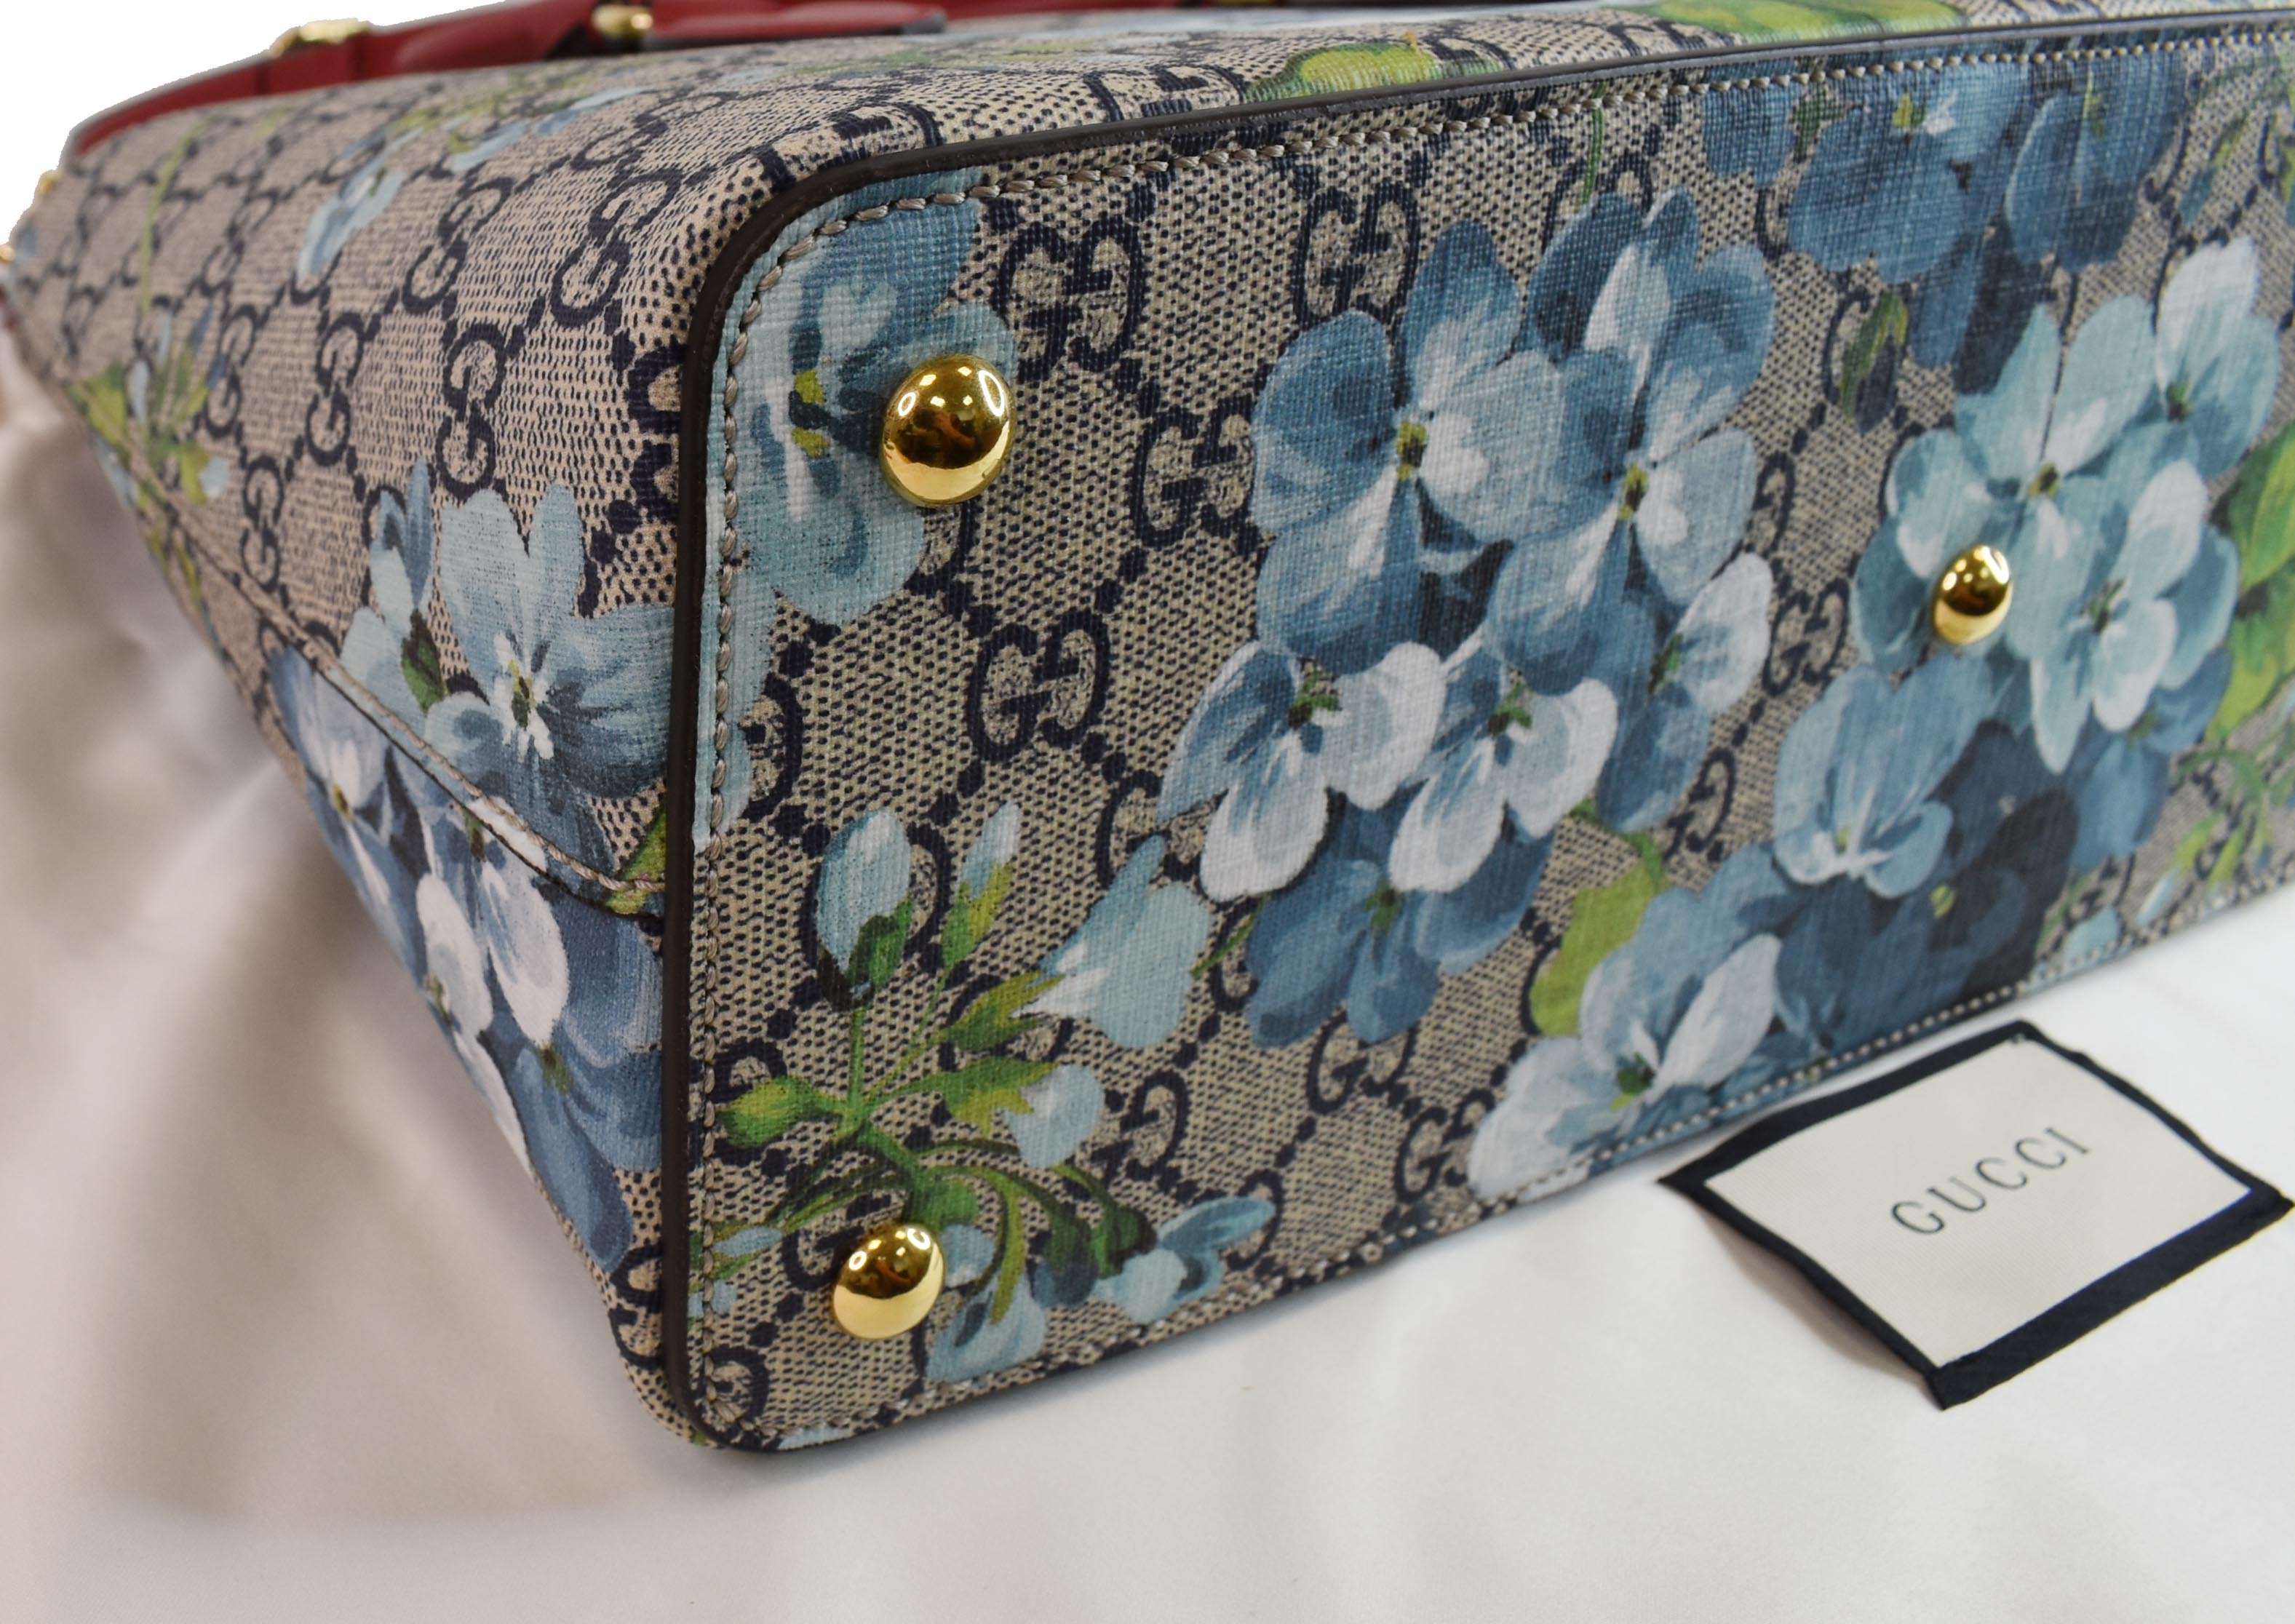 nomorecase on X: Gucci Lastest iPhone 7 Women Flower Leather